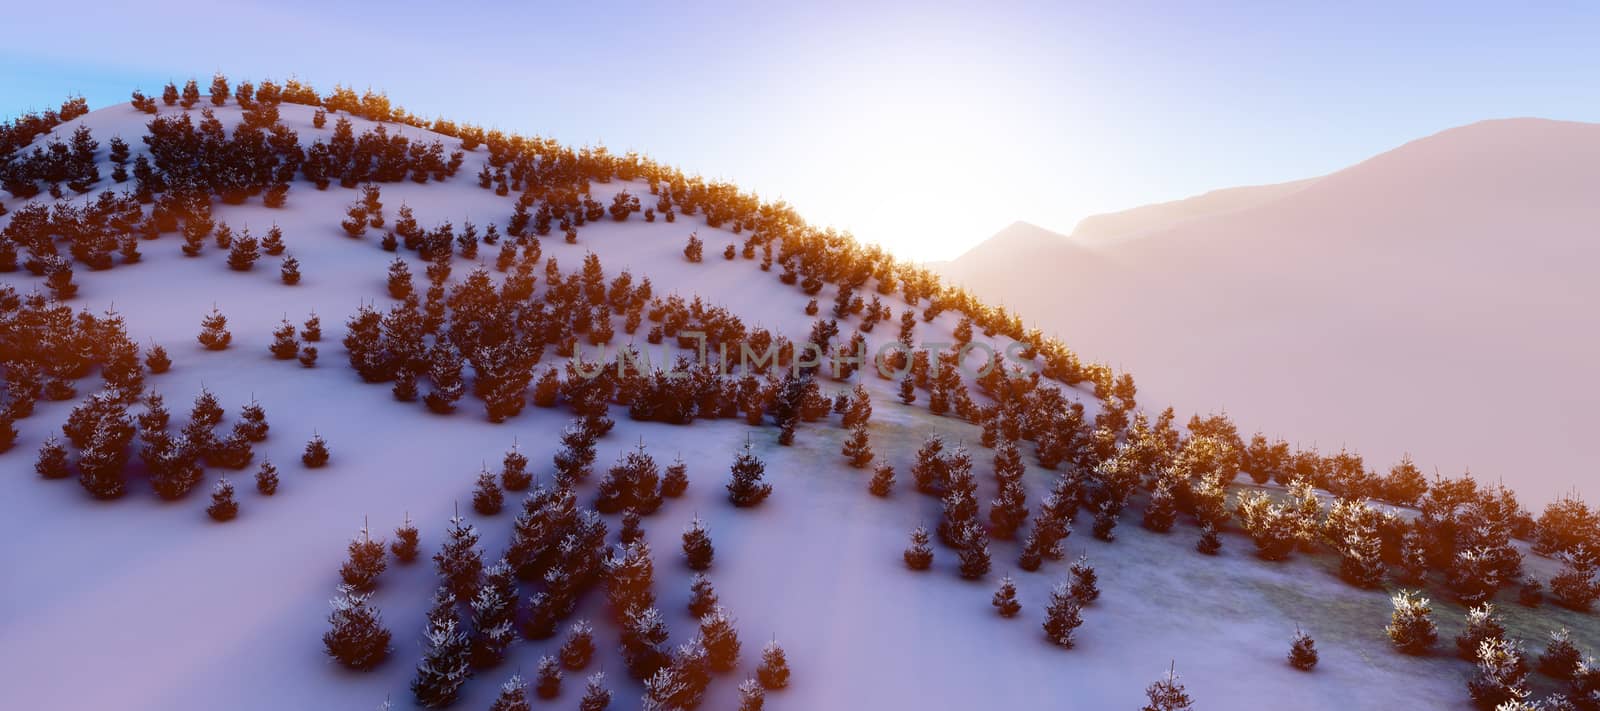 above winter forest mountain sunset 3D rendering illustration